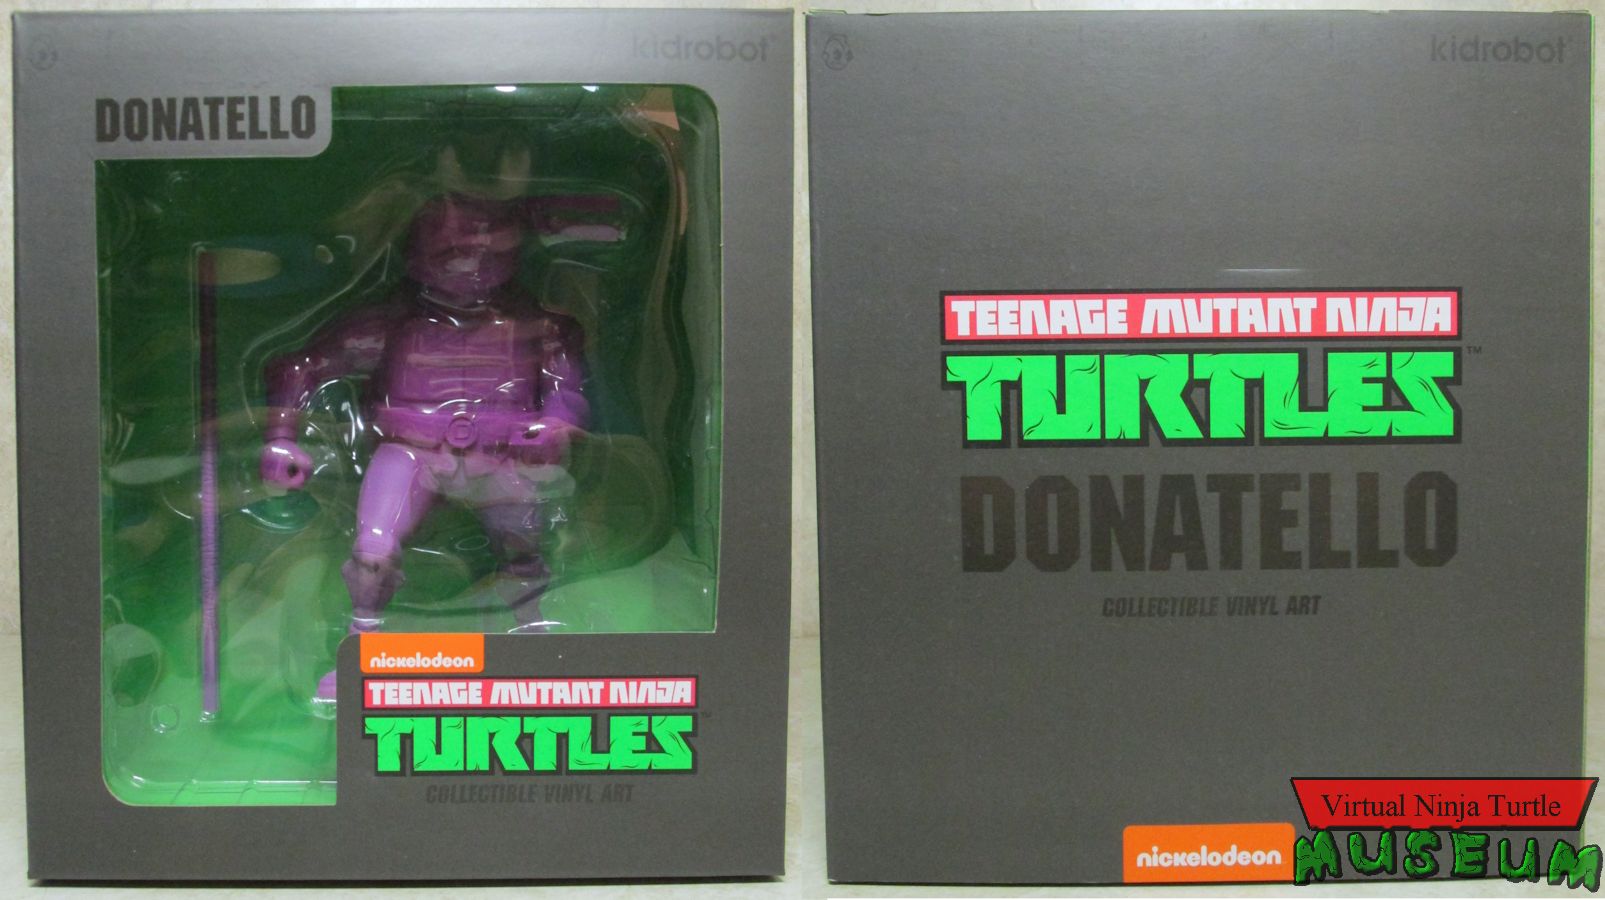 Donatello box front and back